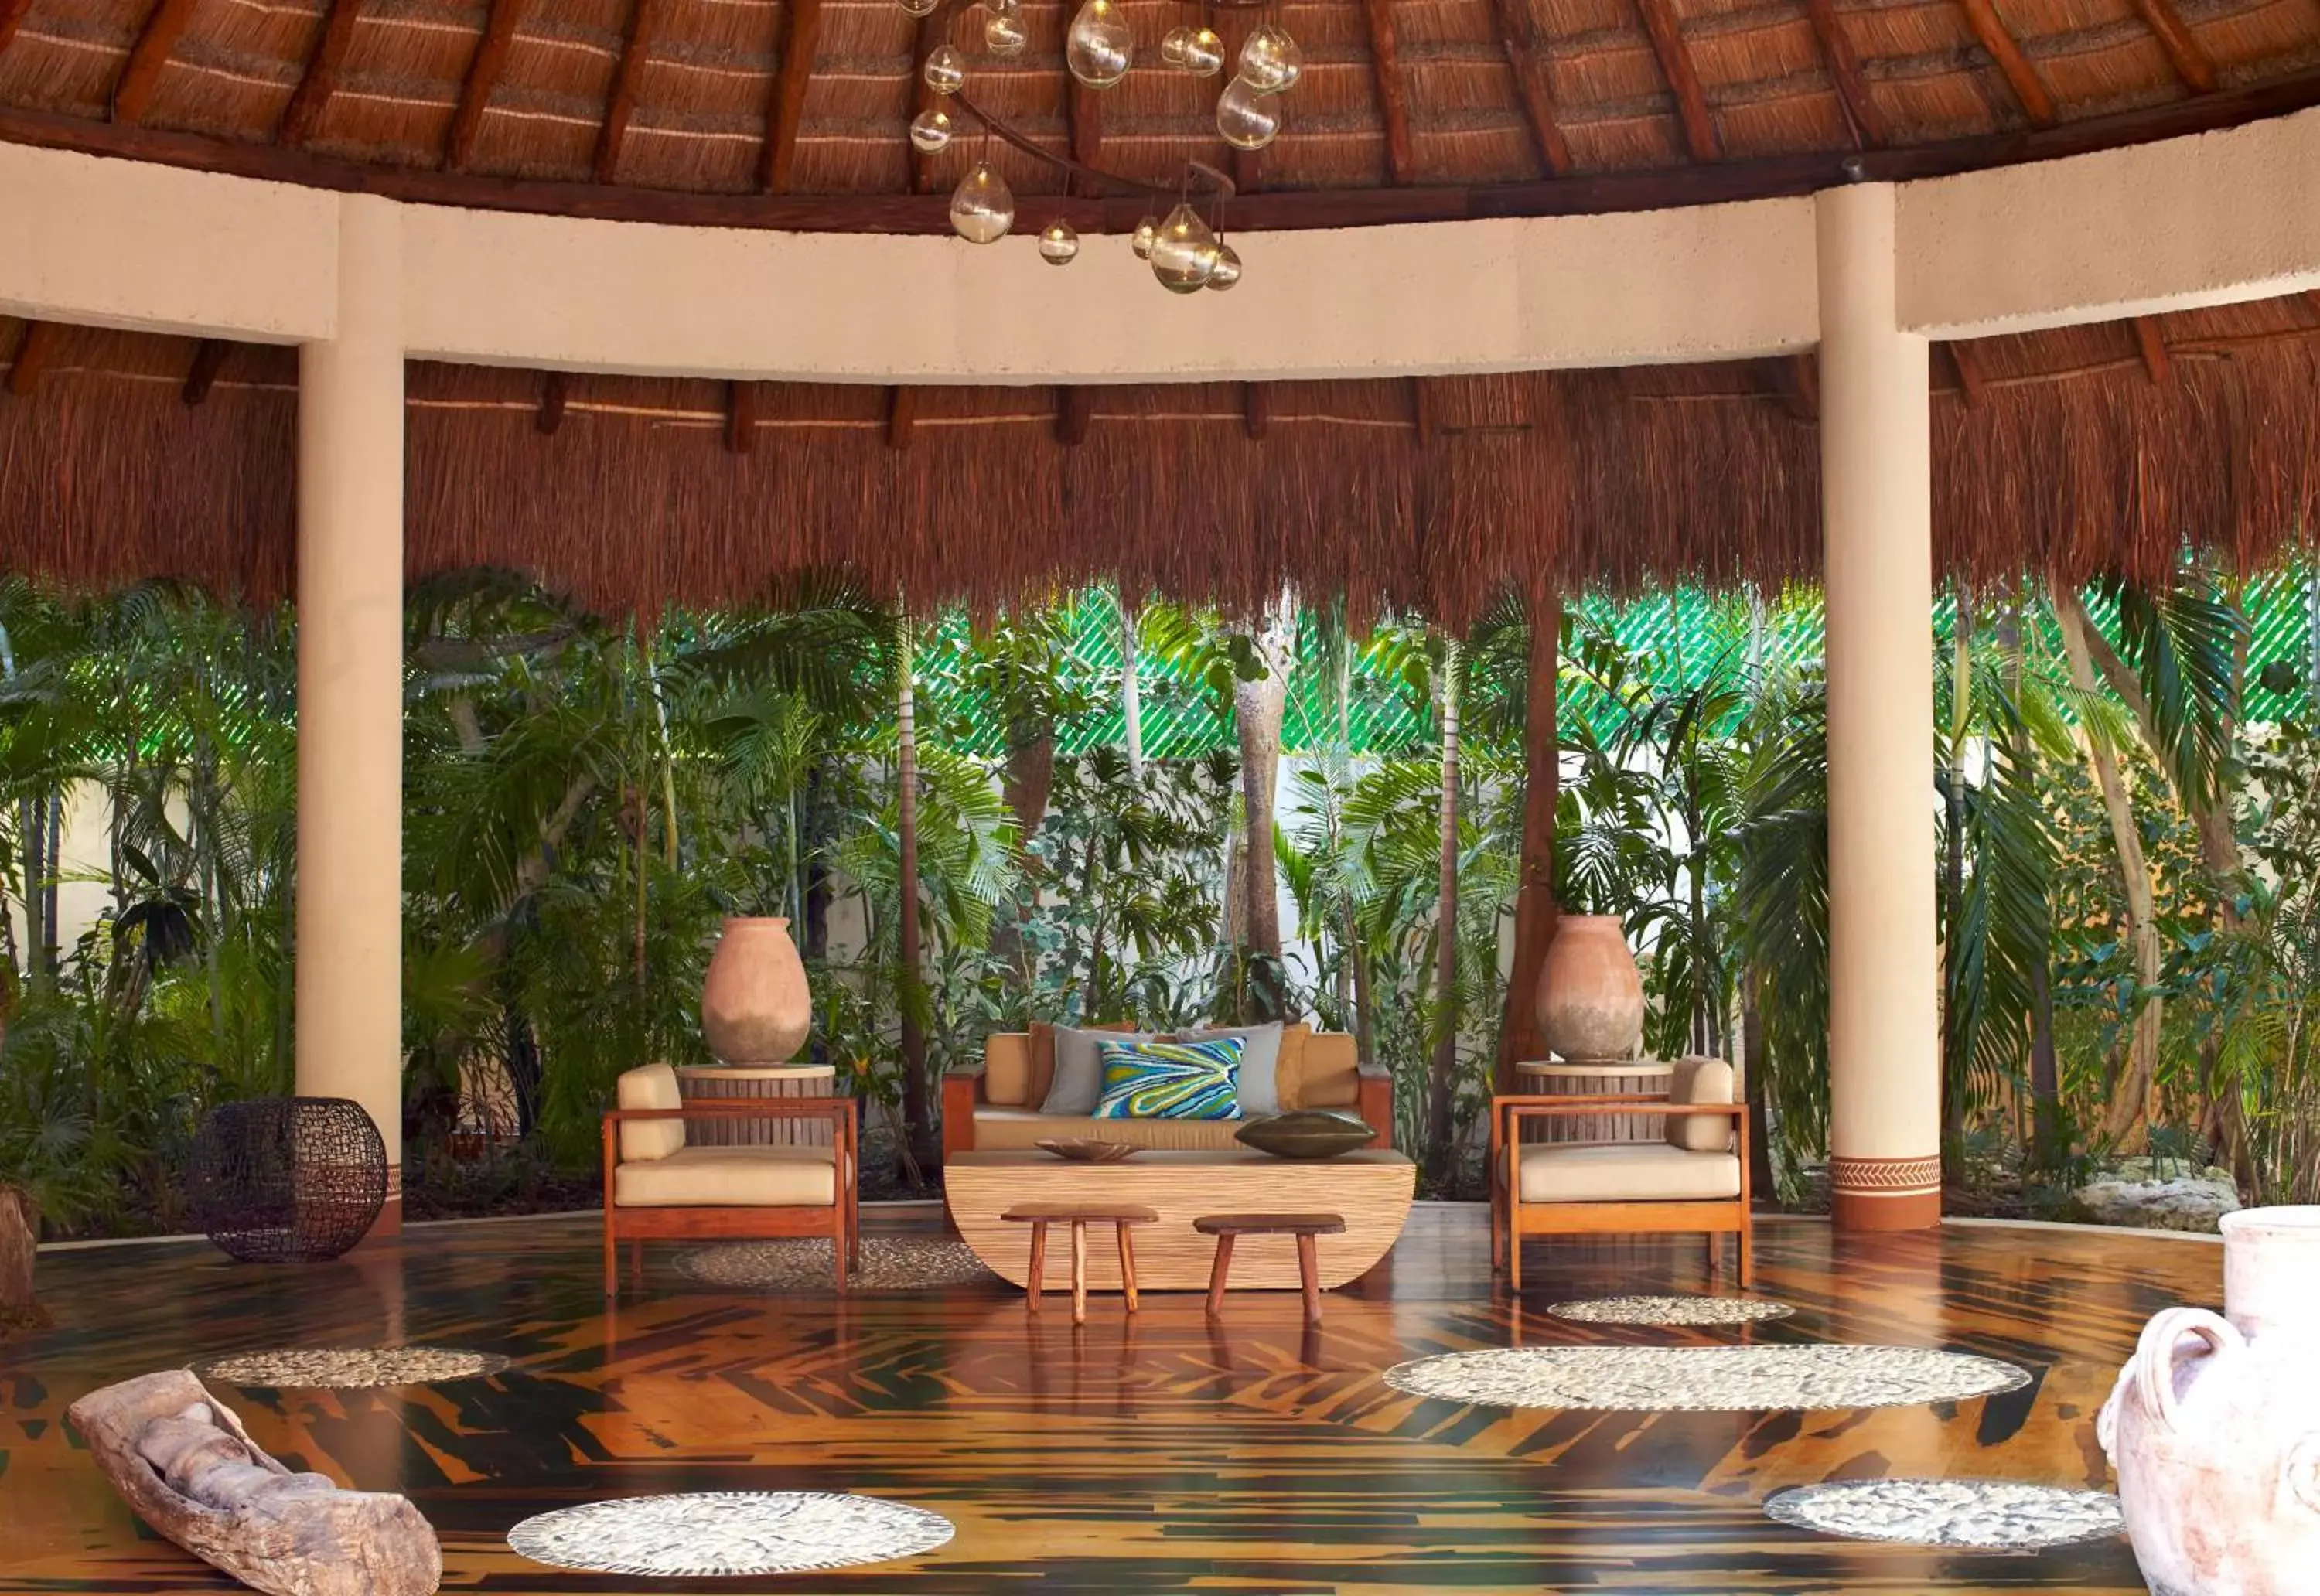 Lobby or reception in Viceroy Riviera Maya, a Luxury Villa Resort